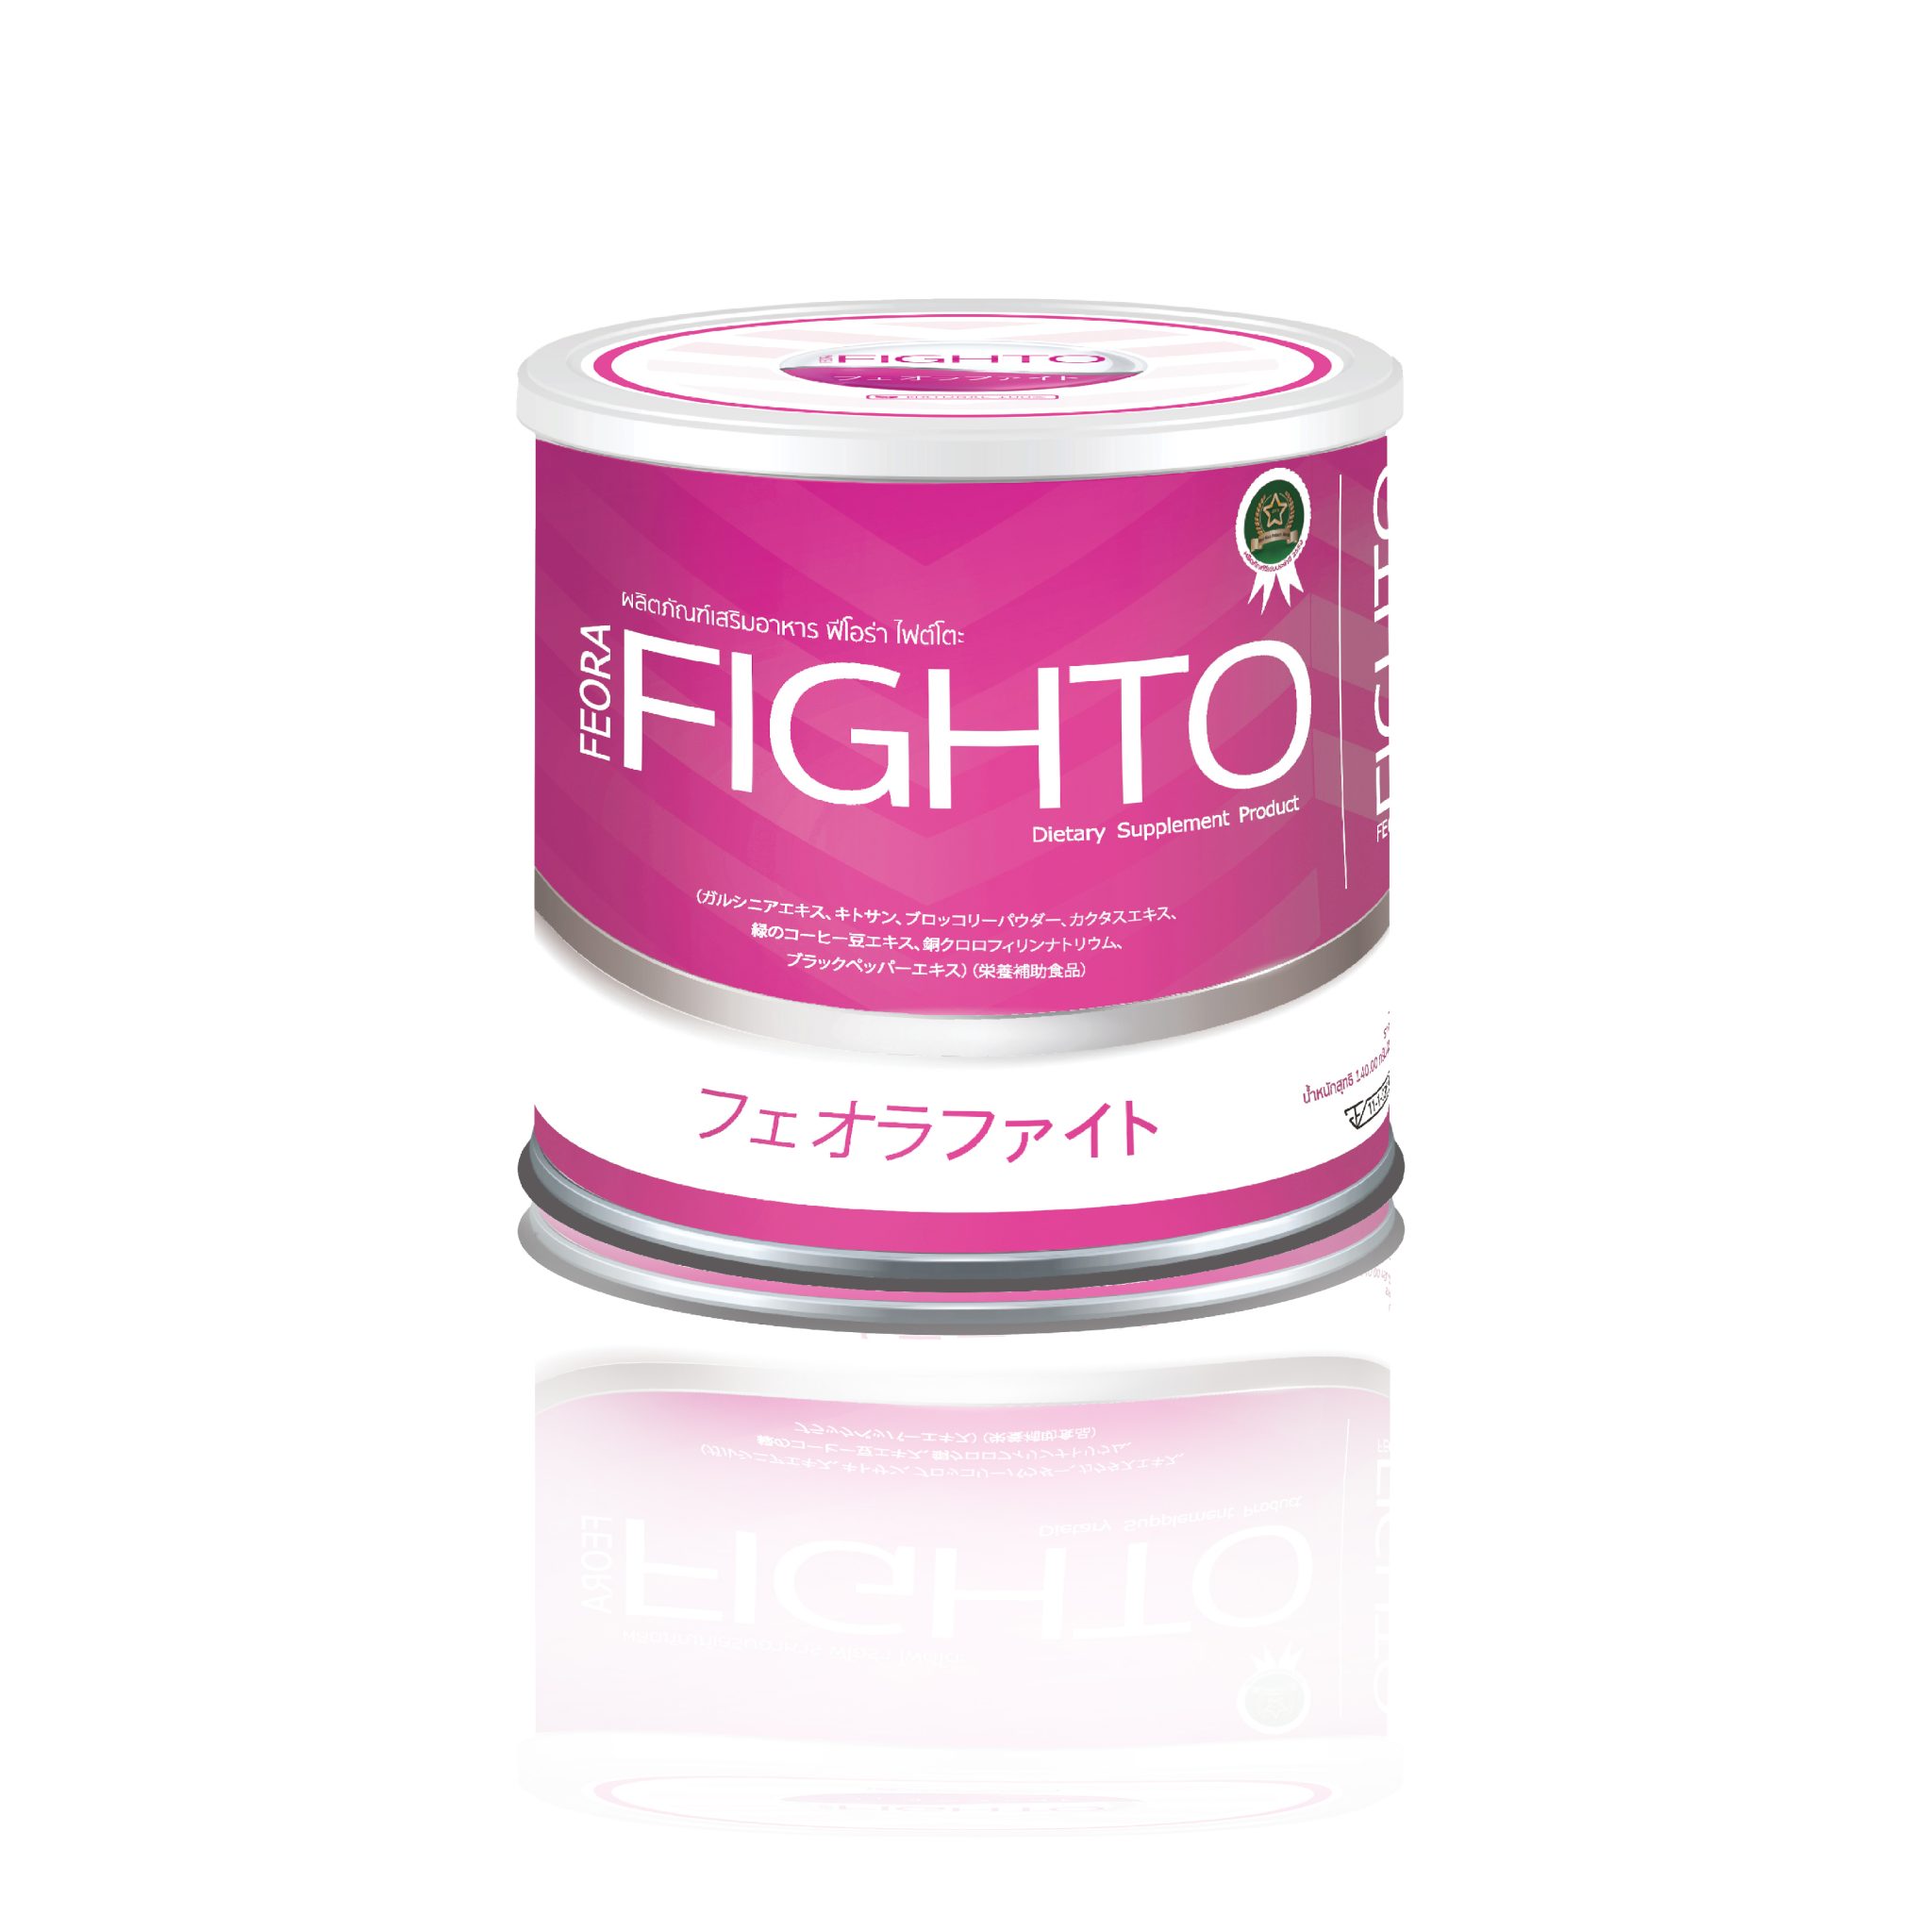 Feora Fighto Dietary Supplement